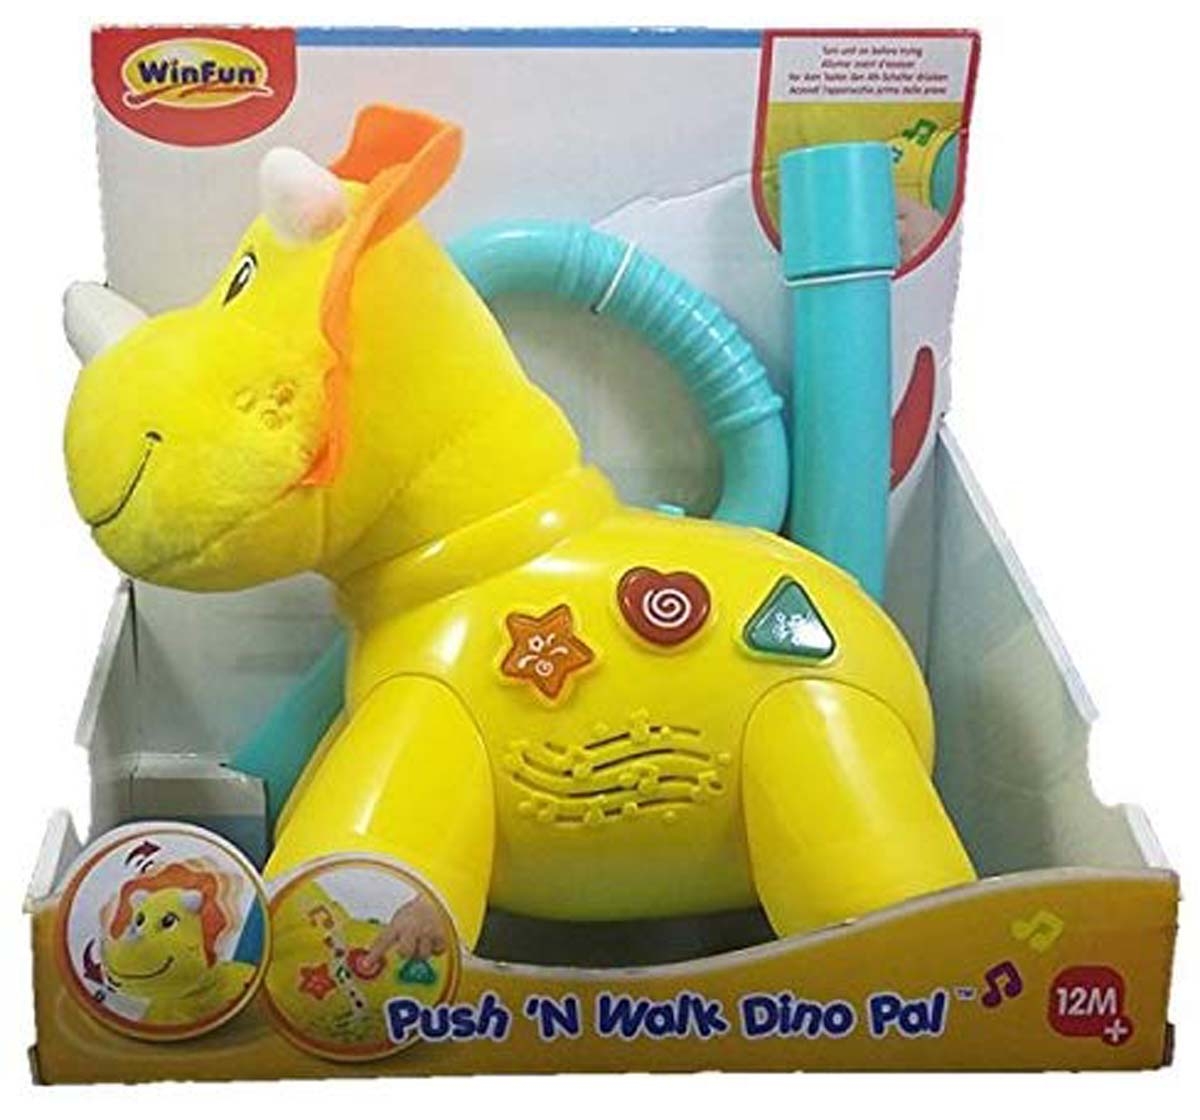 WinFun | Winfun Push N Walk Dino Pal - Yellow Early Learner Toys for Kids age 12M+ 1